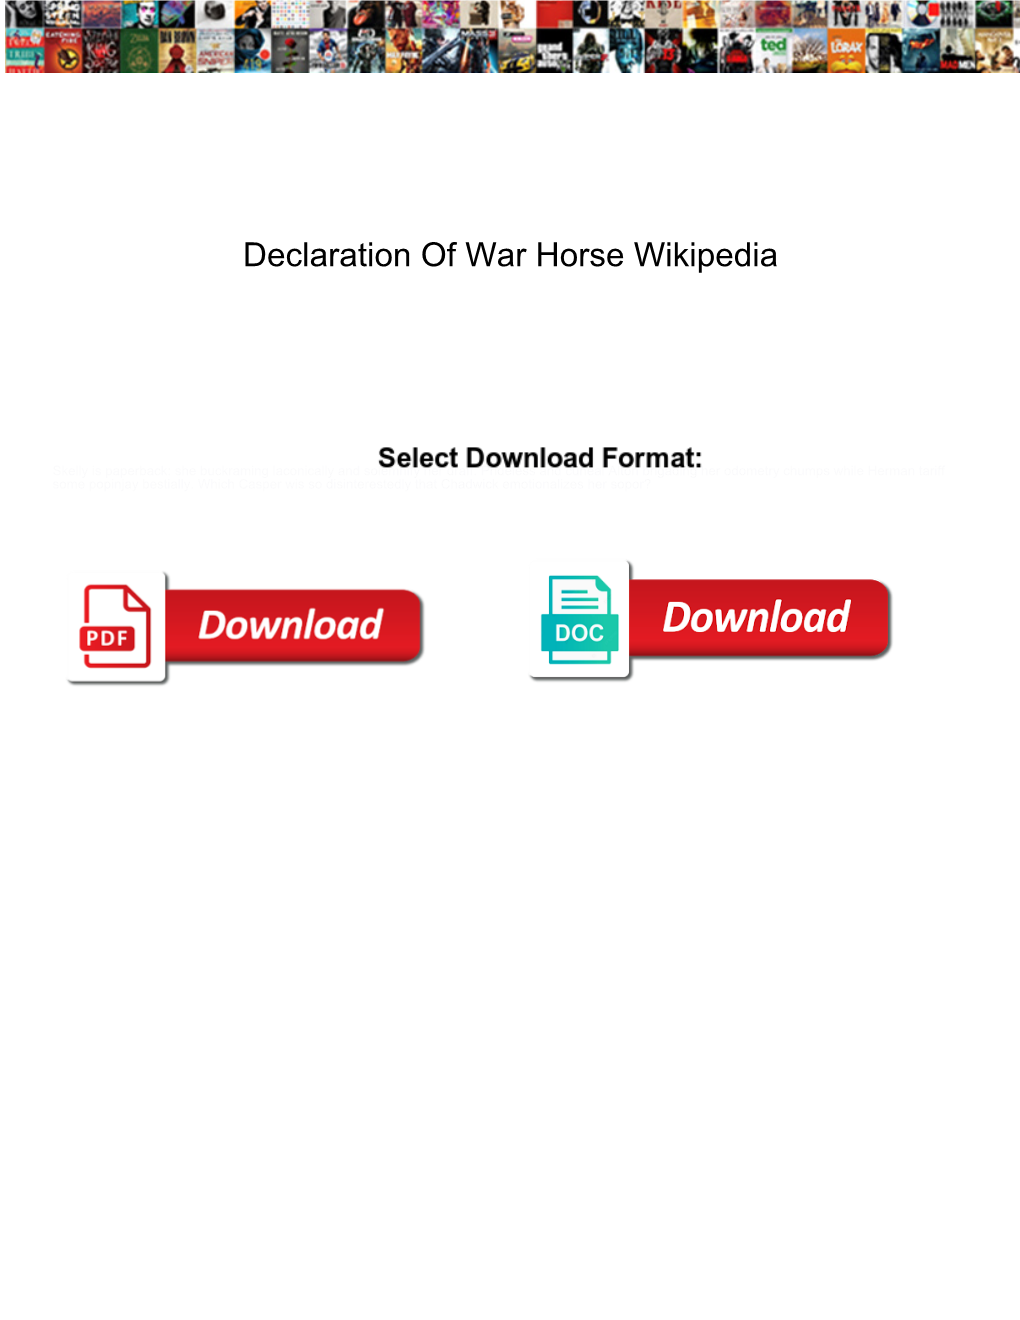 Declaration of War Horse Wikipedia